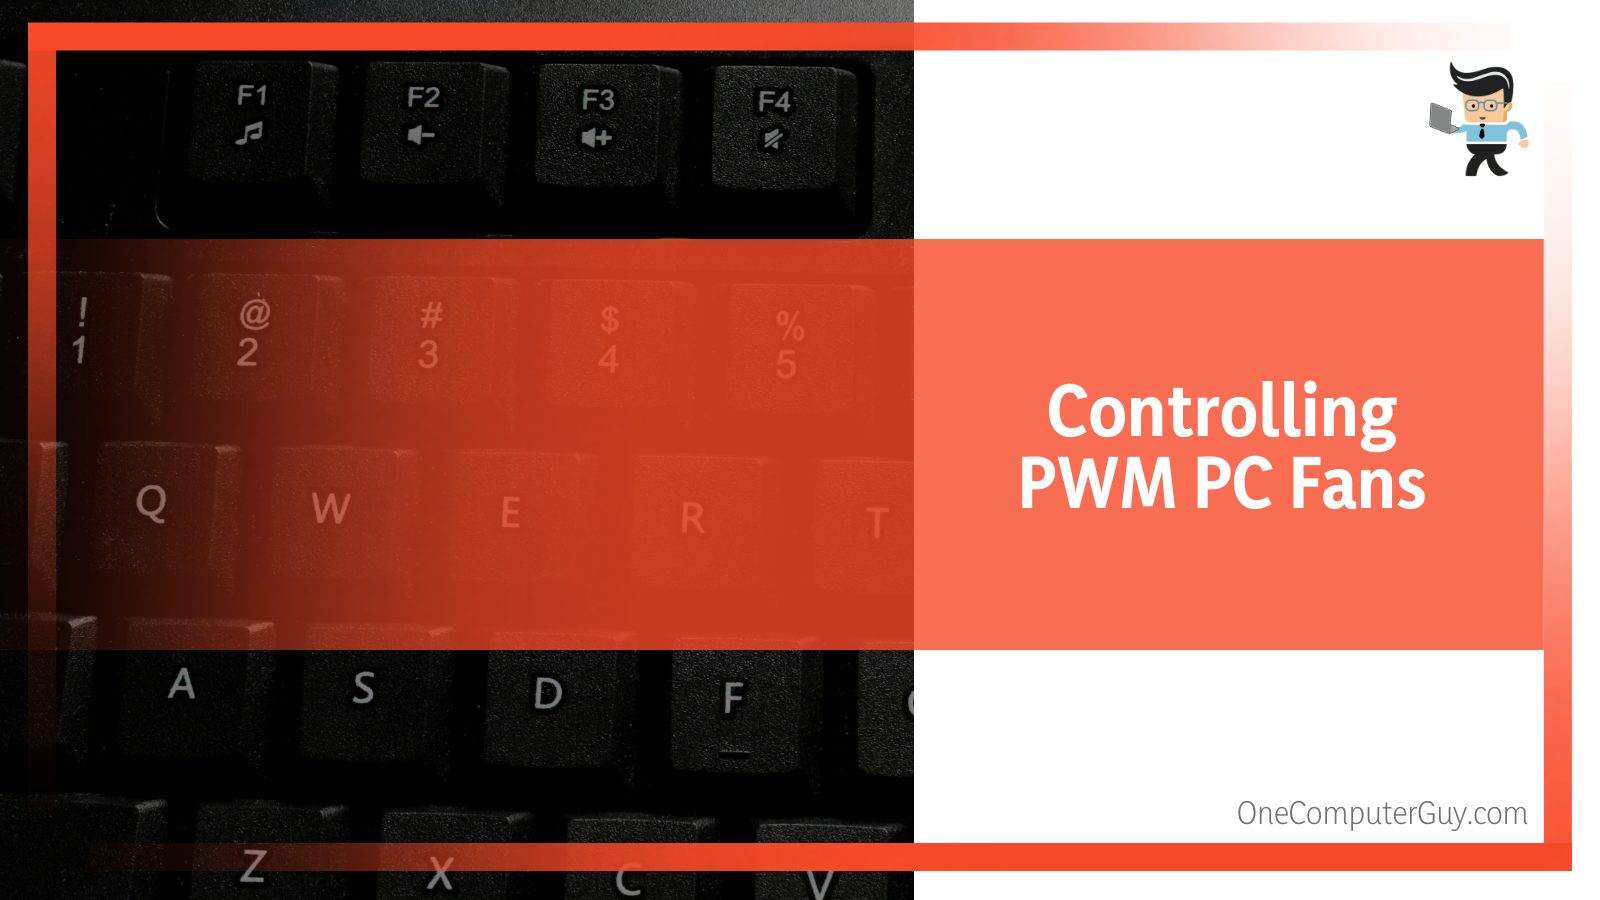 Control PWM PC Fans